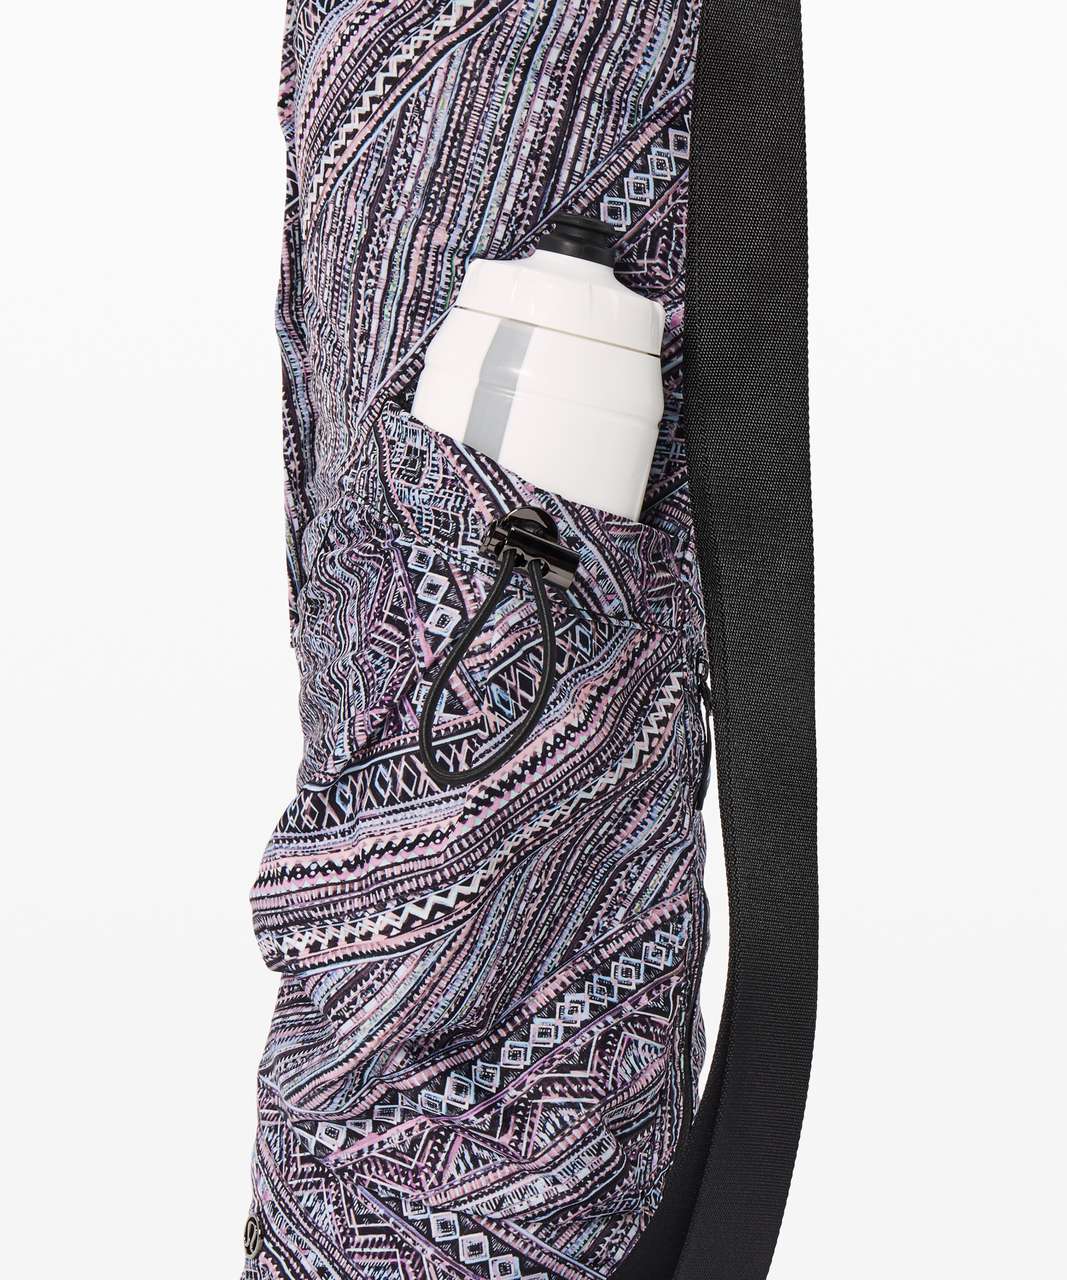 lululemon athletica Adjustable Size Yoga Mat Bags